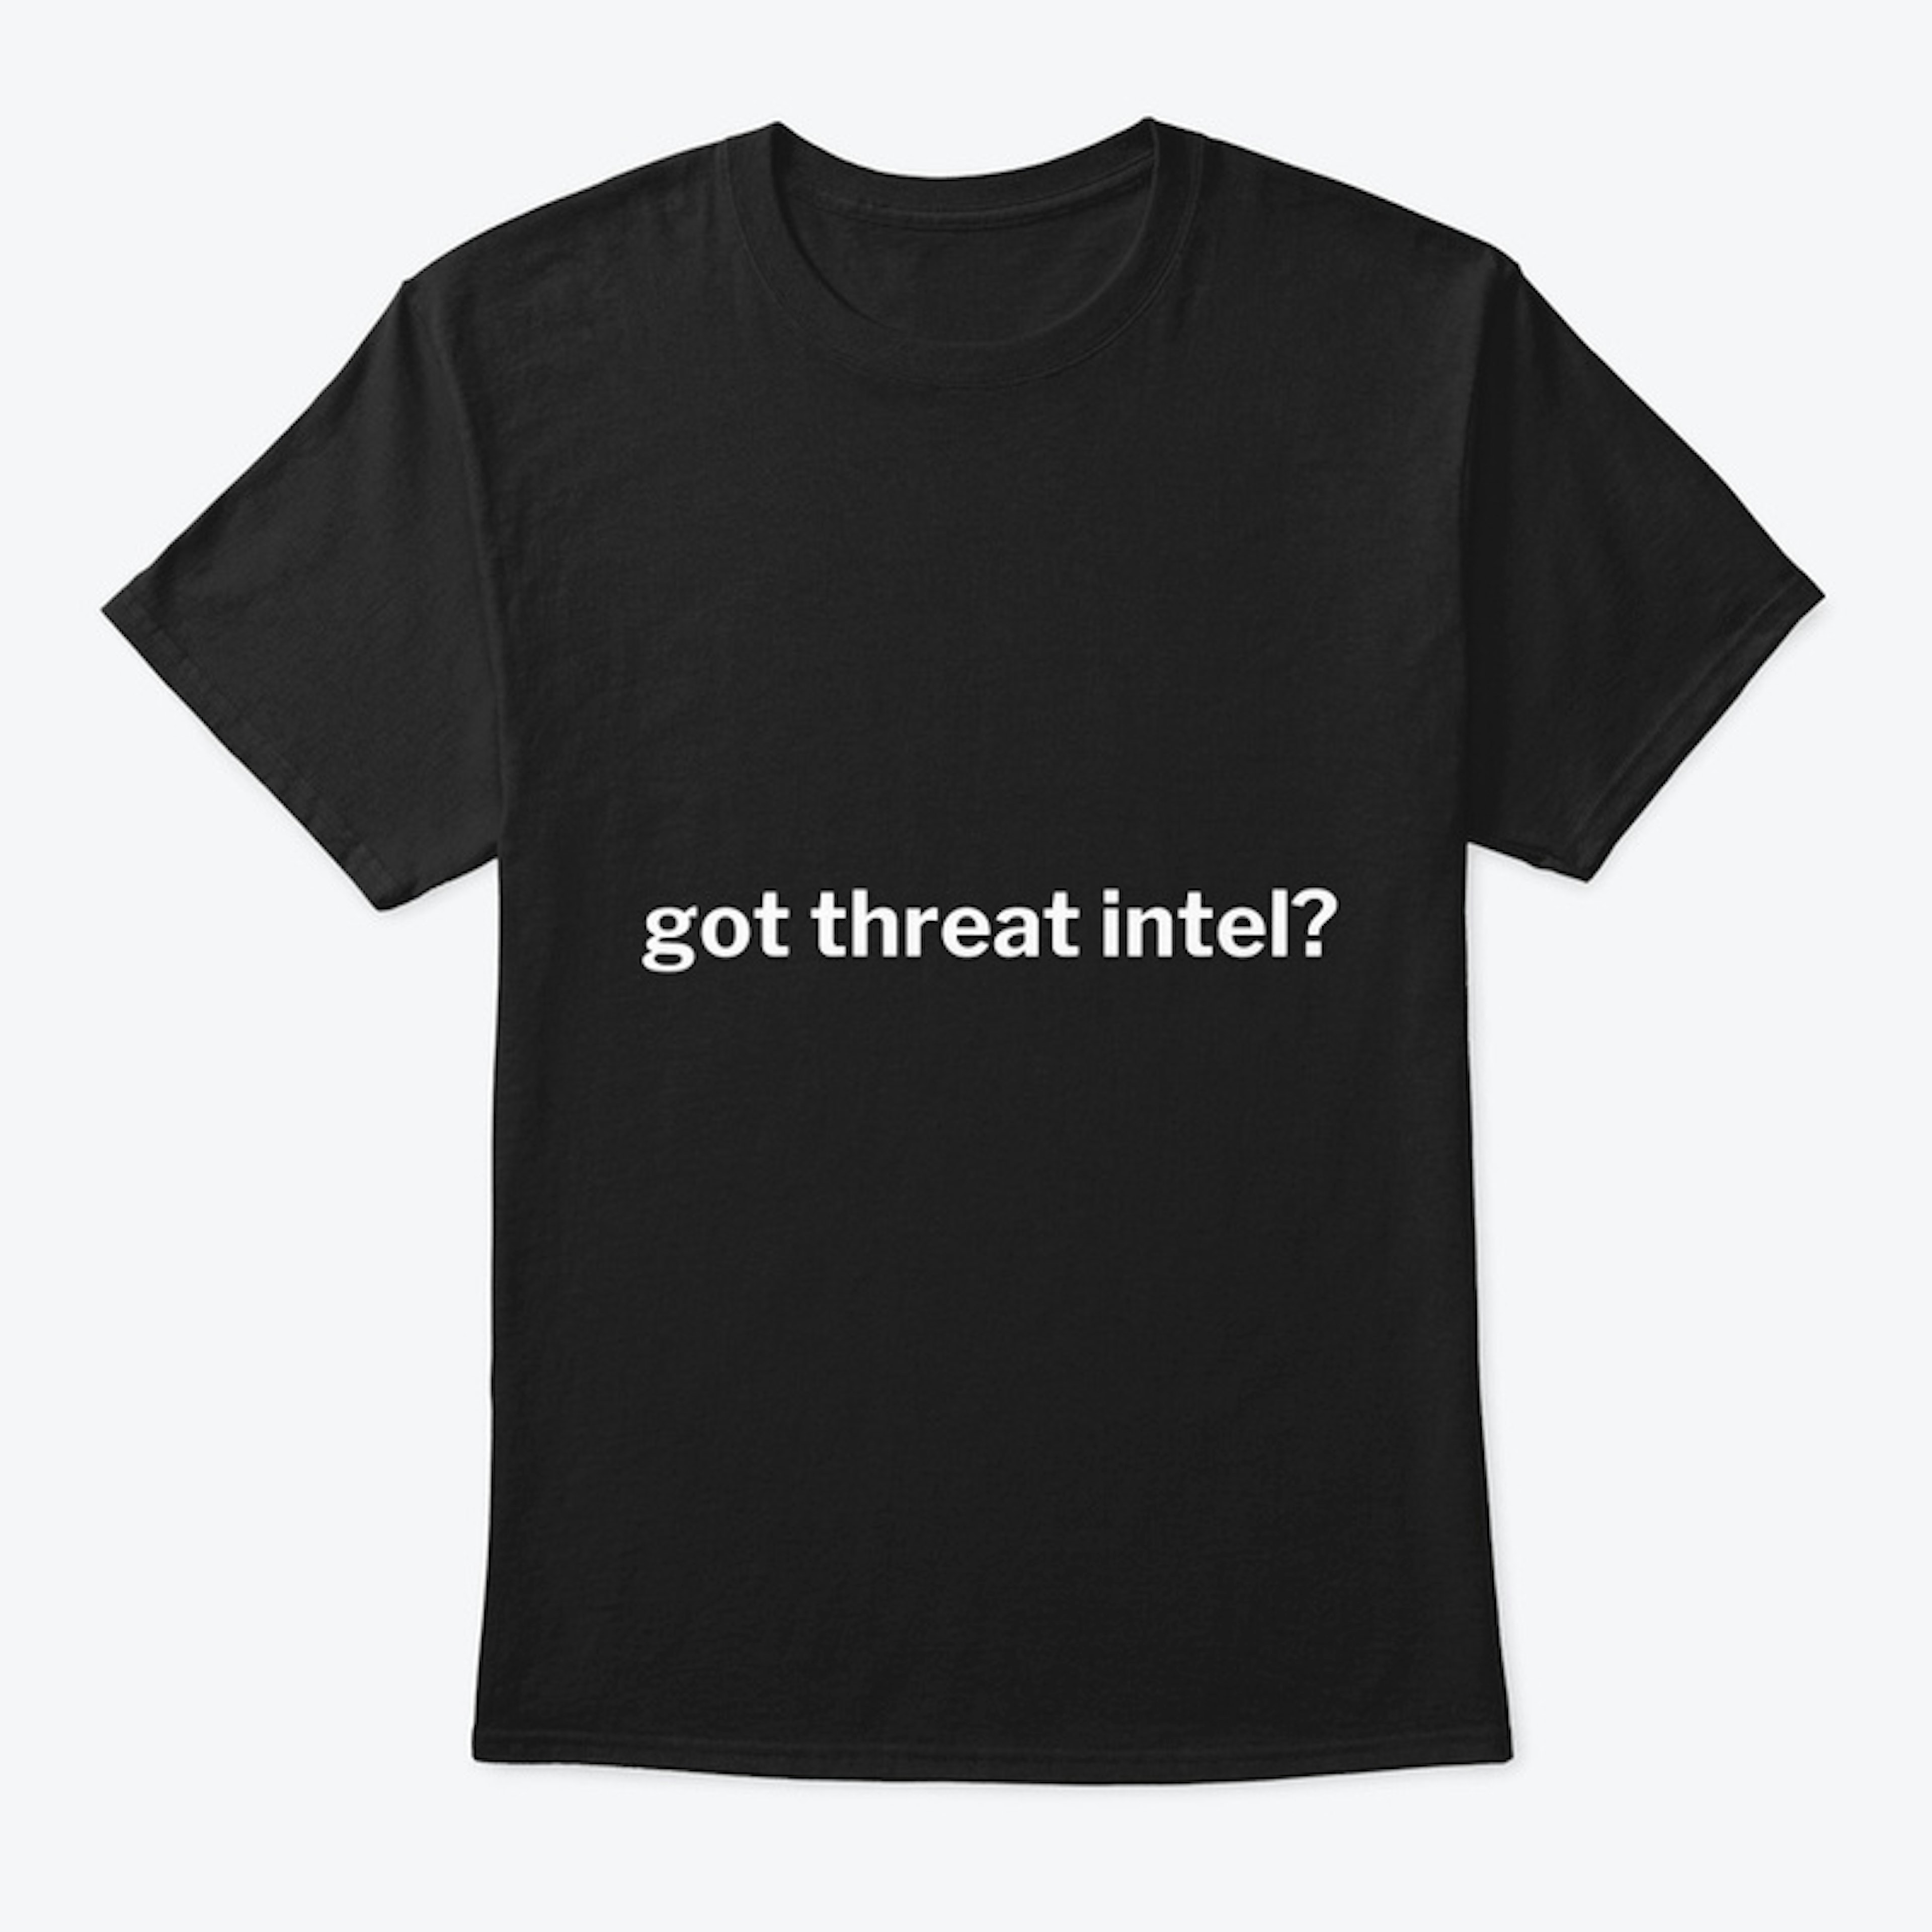 got threat intel?